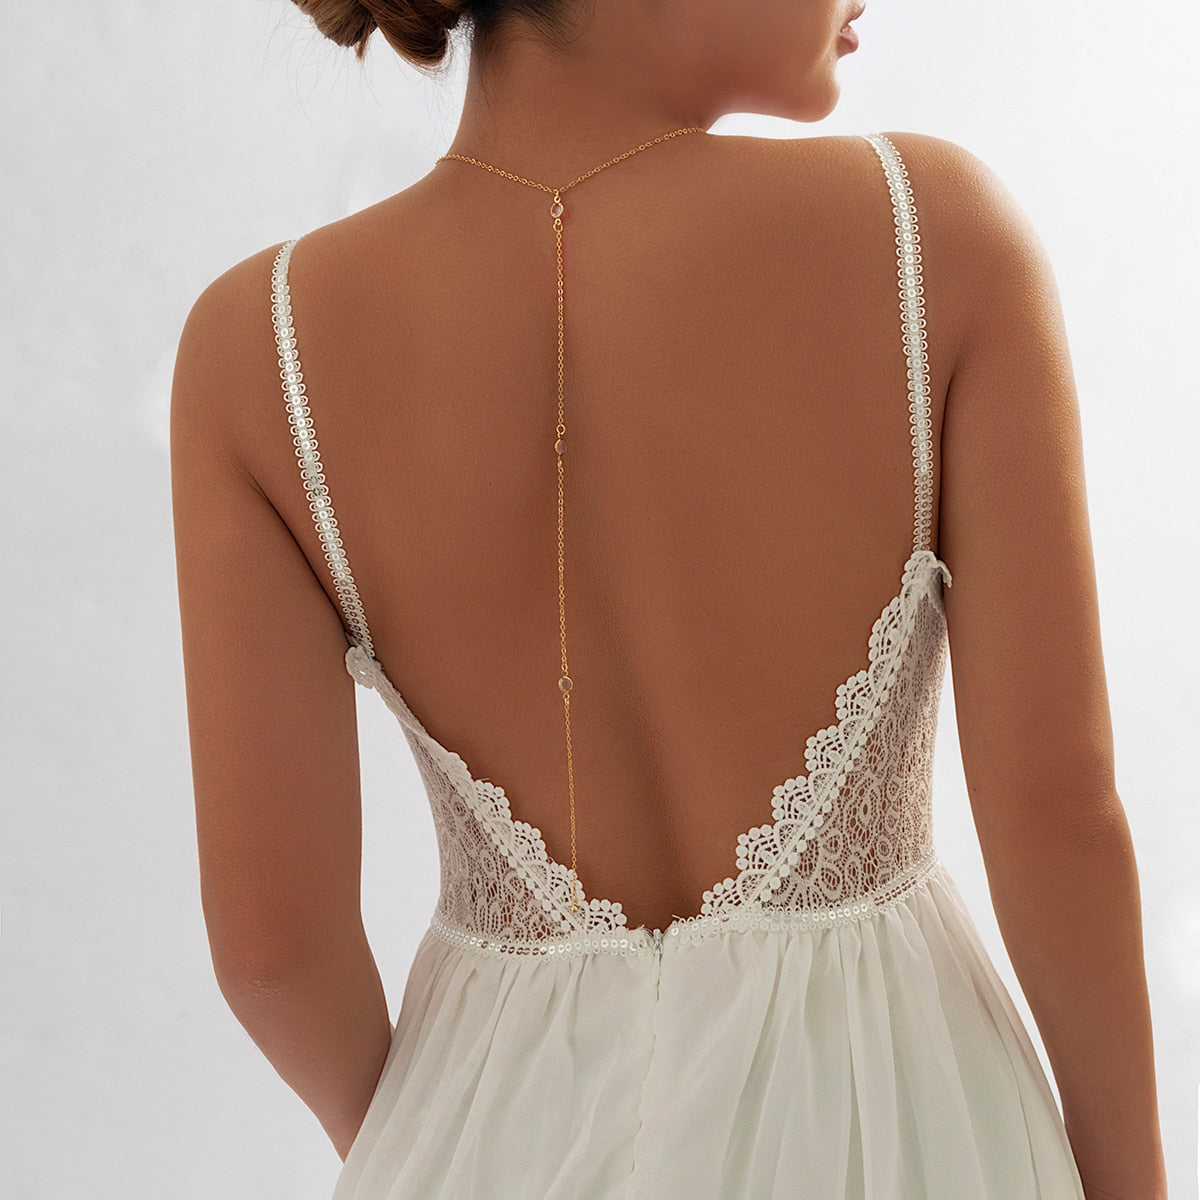 Sexy Kpop Crystal Long Tassel Back Chain Necklaces for Women Wedding Bridal Prom Simple Rhinestone Backless Dress Accessories - Nolita Nicole